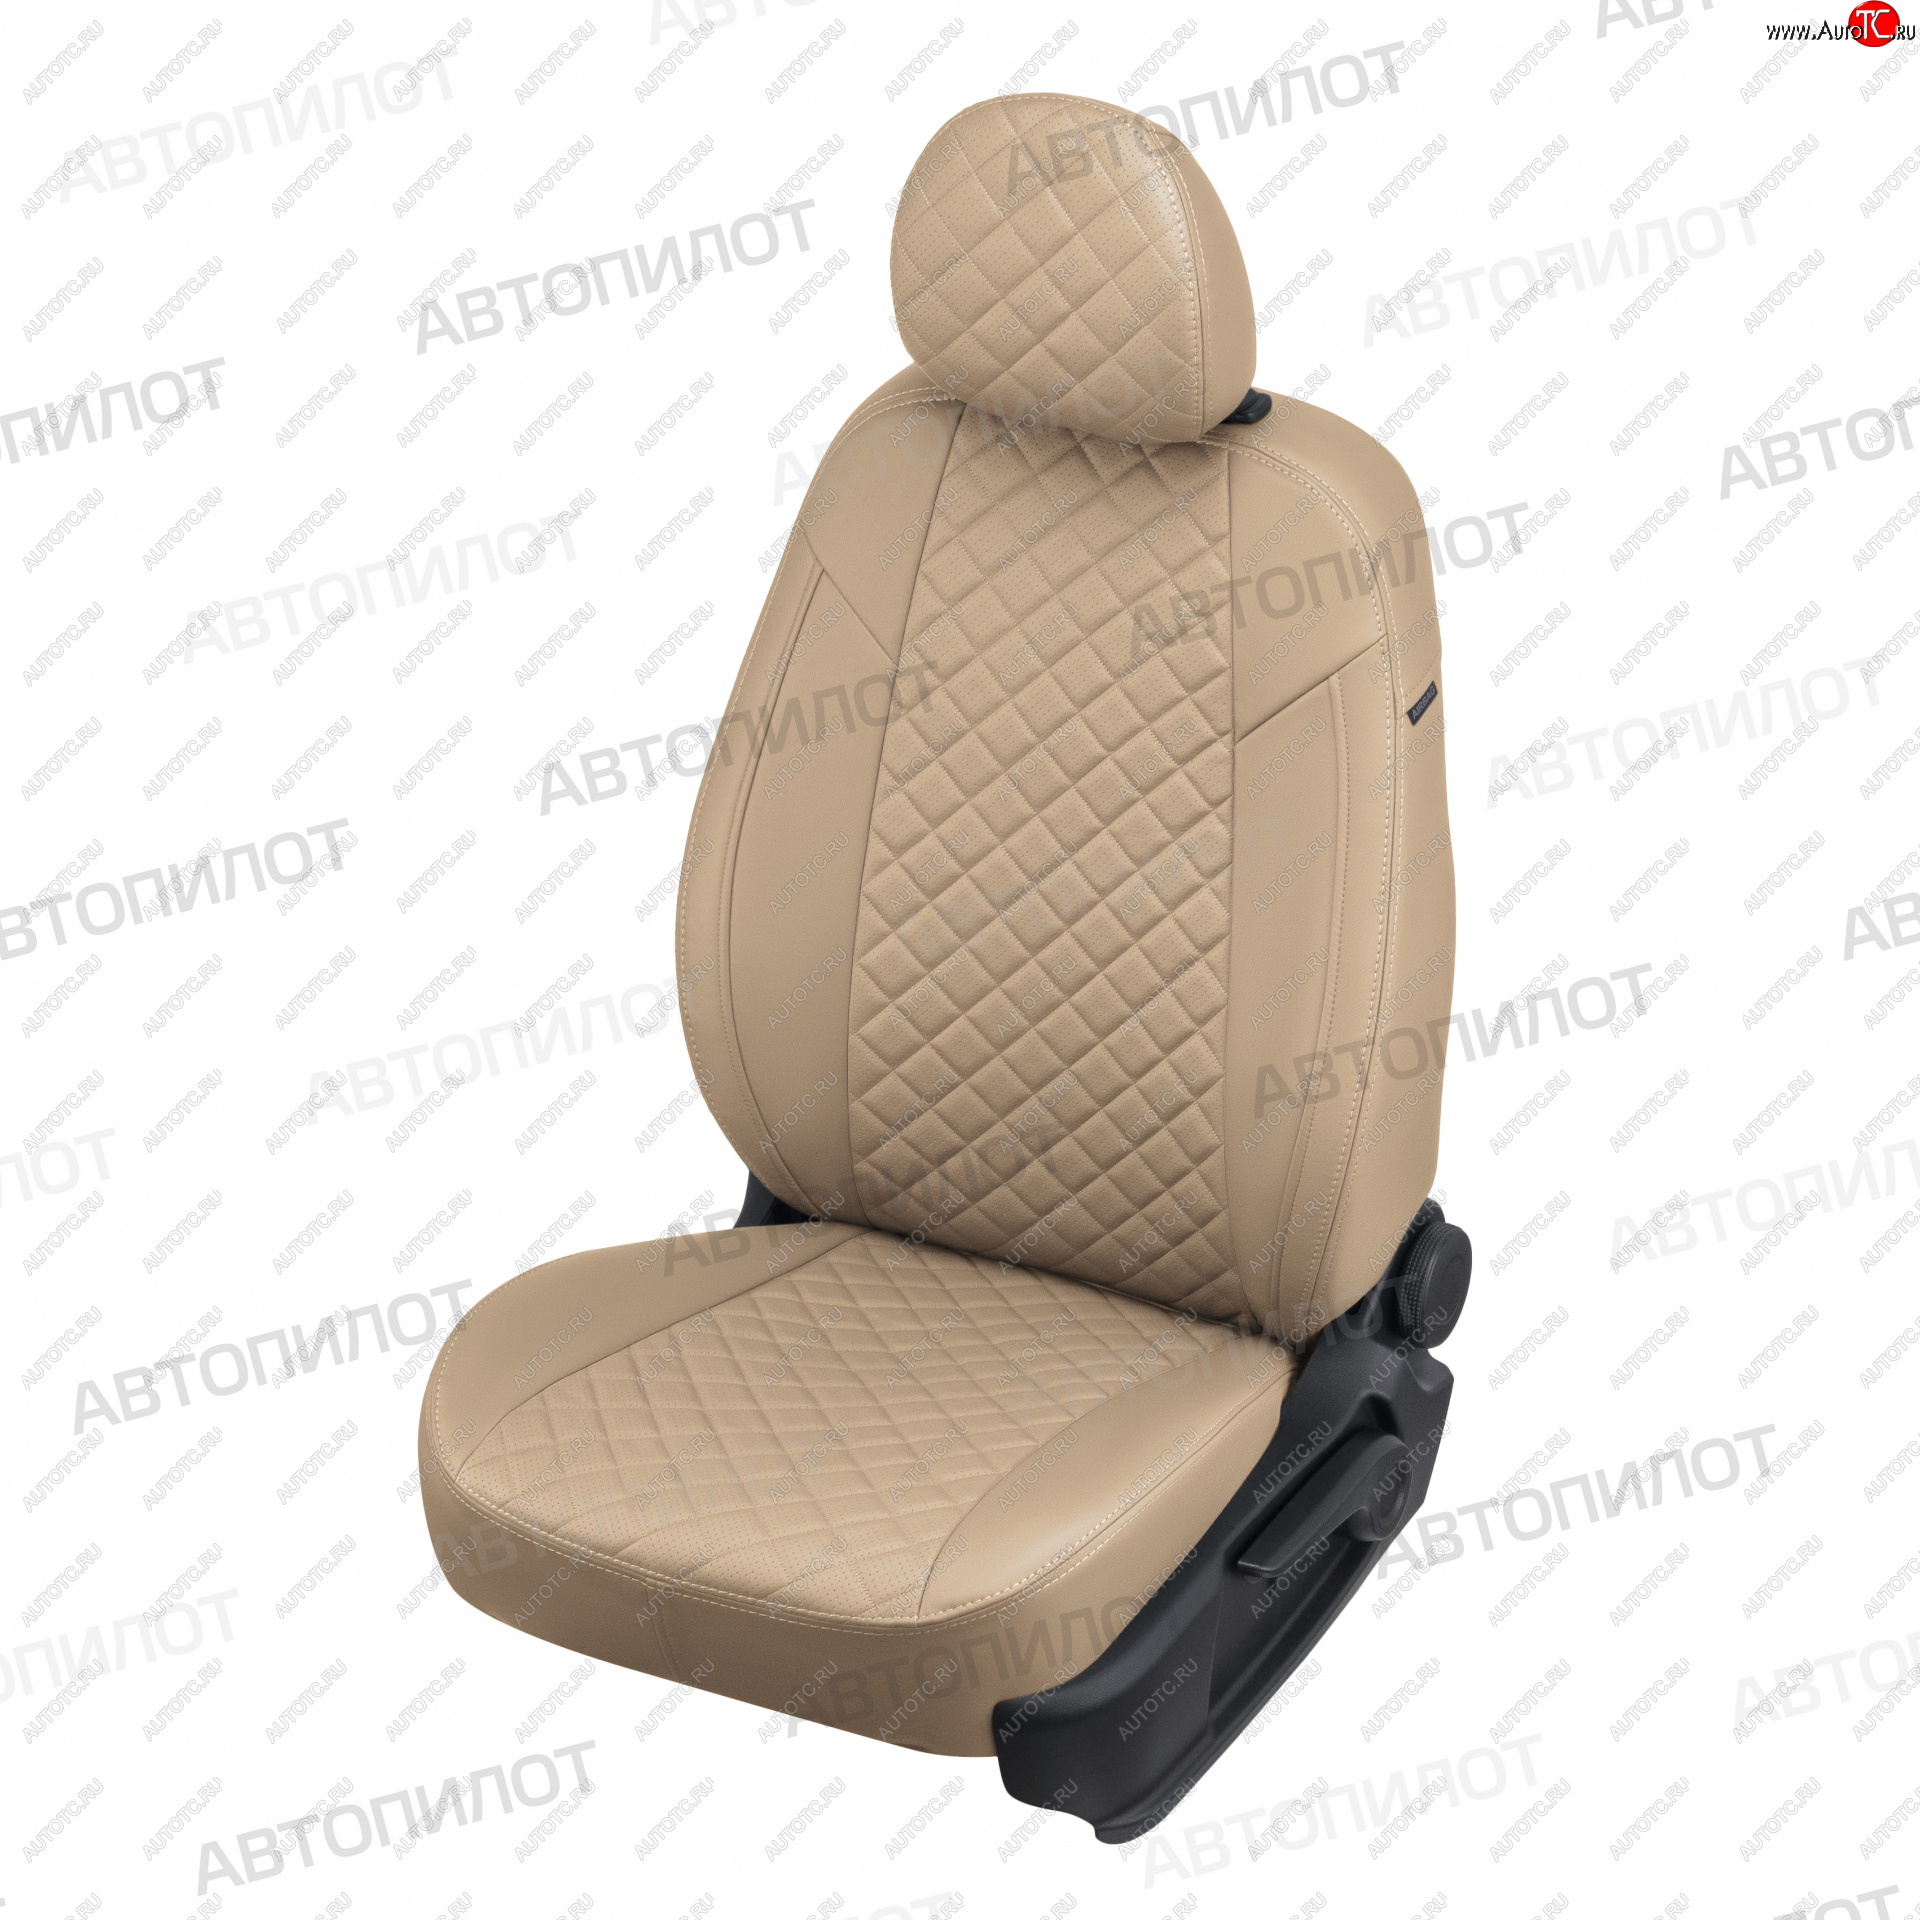 7 799 р. Чехлы сидений (экокожа) Автопилот Ромб  Ford Mondeo (2007-2014) (темно-бежевый)